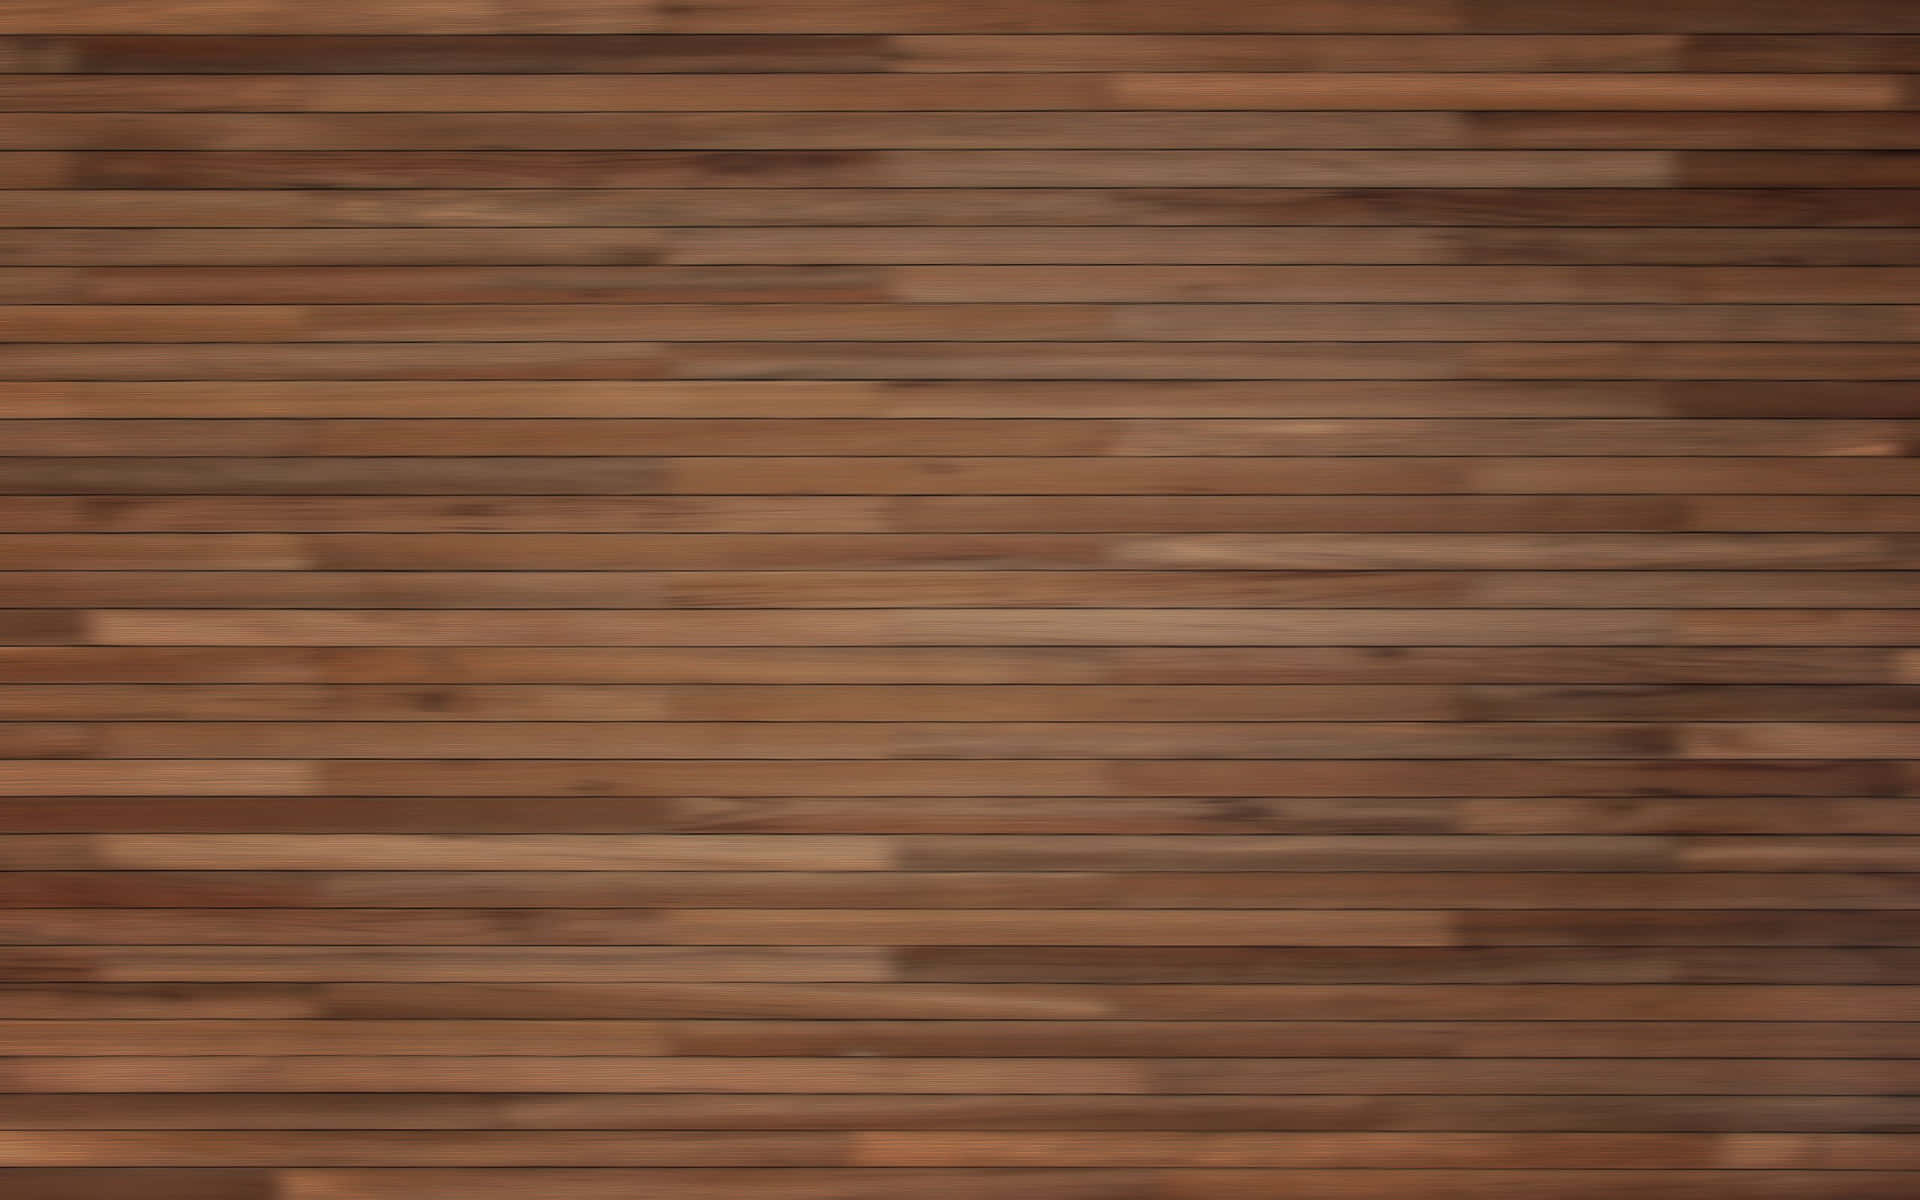 Elegant And Classy Wood Flooring Background